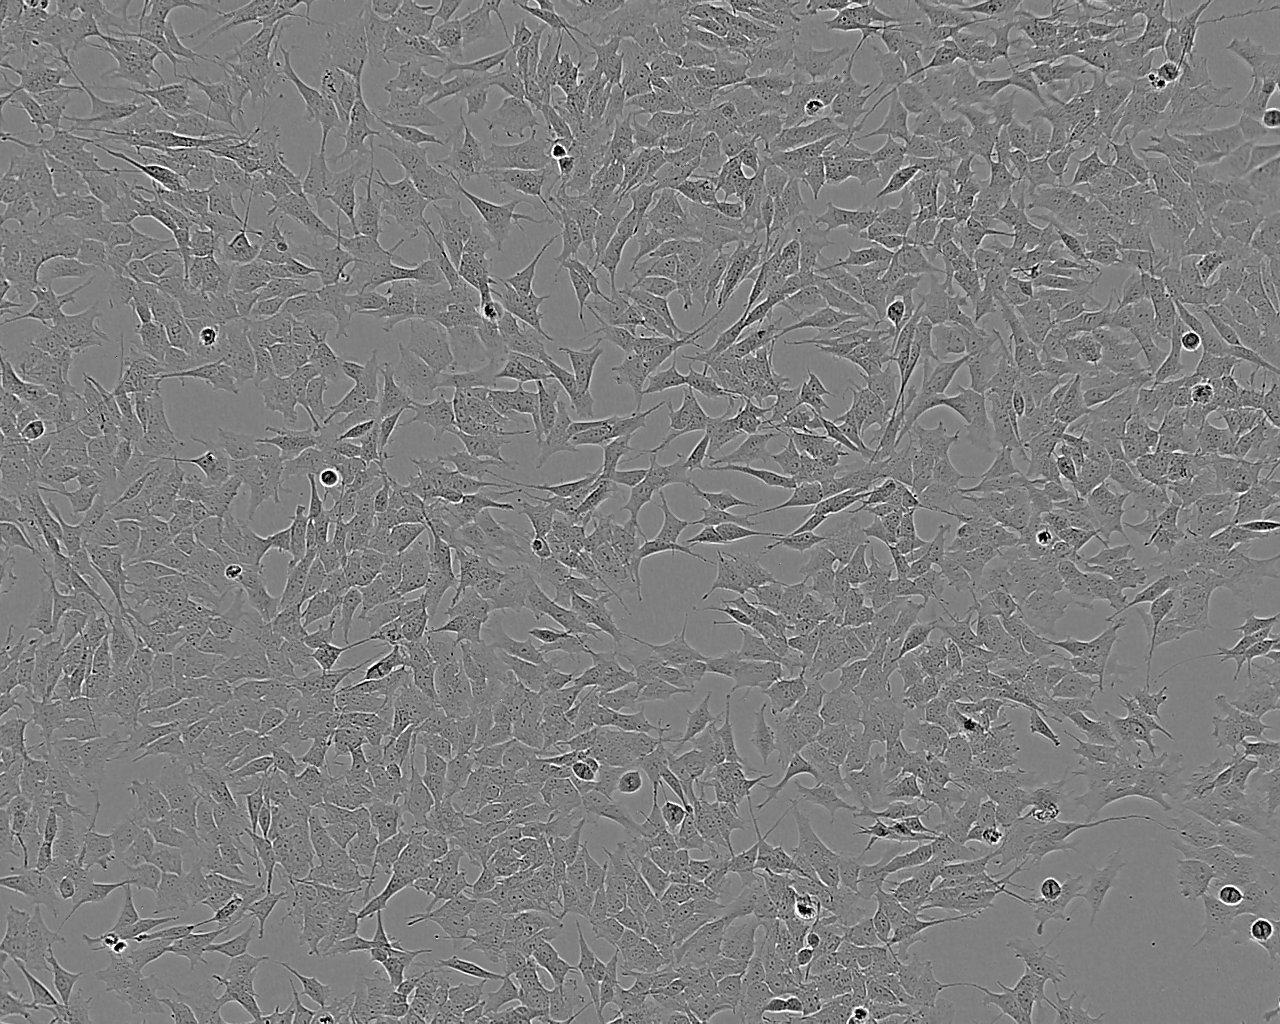 EC-GI-10 cell line人食管鳞状细胞癌细胞系